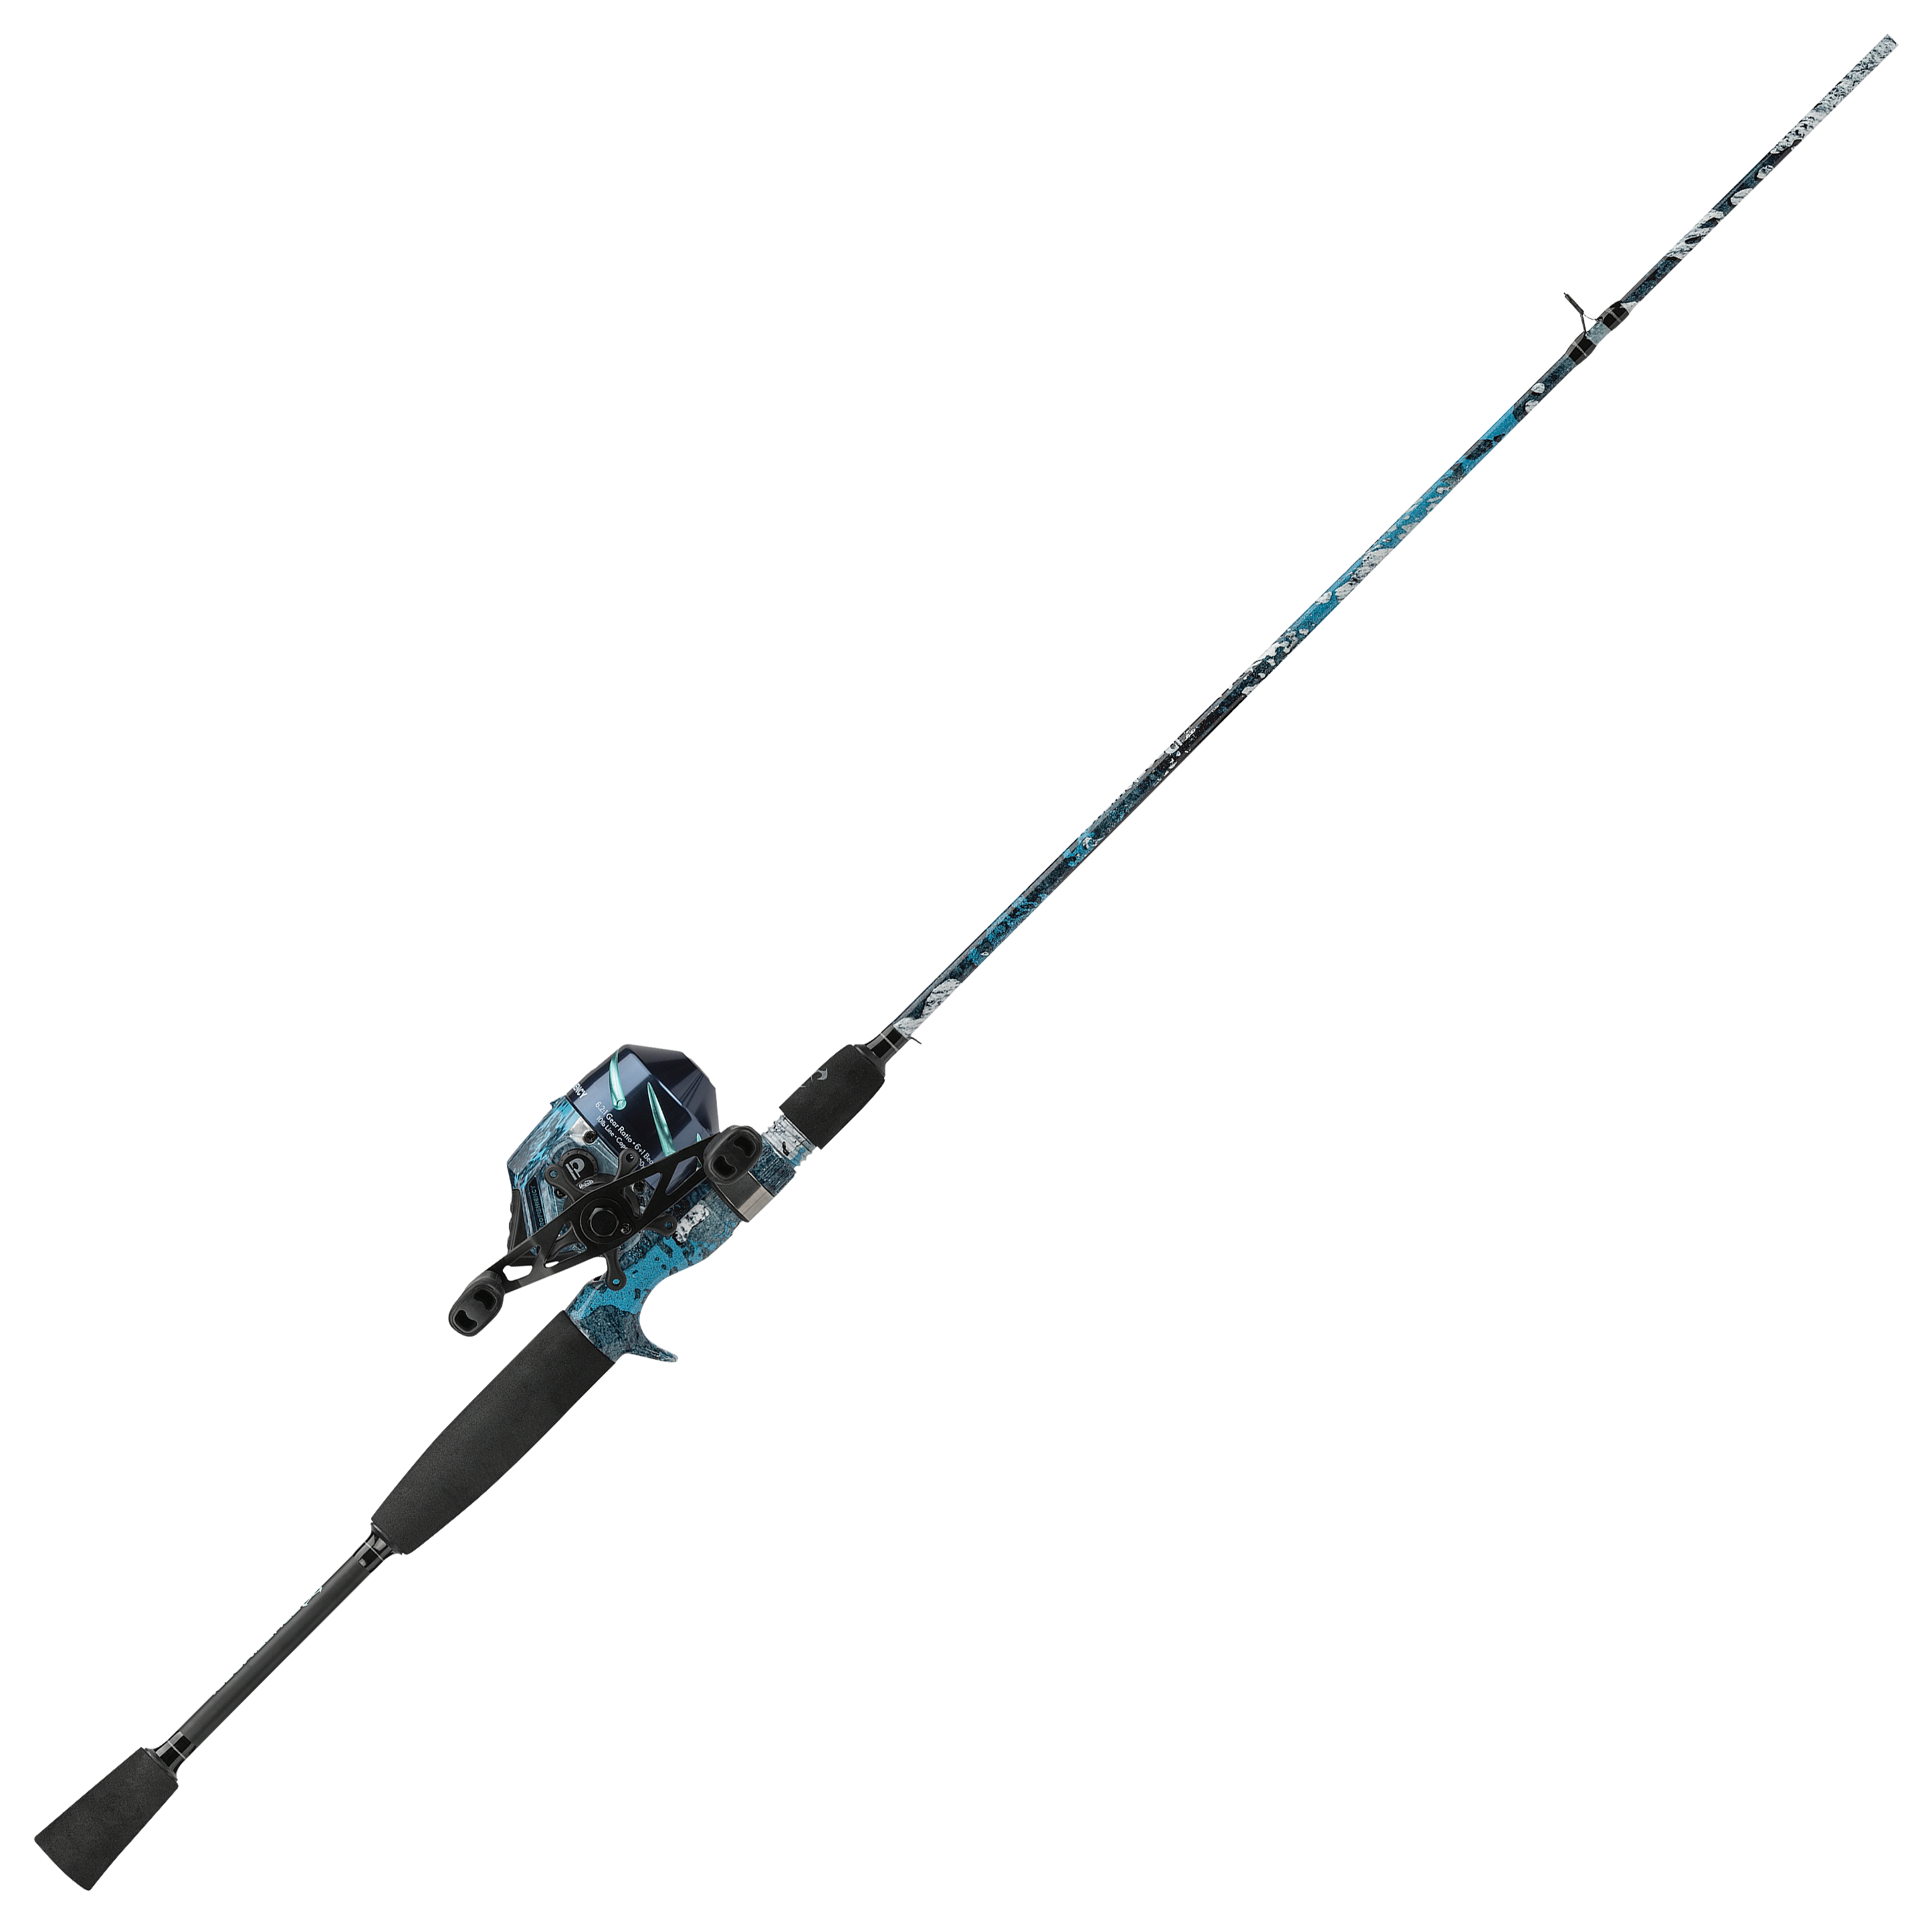 Profishiency True Timber Rift Dock Fishing Rod And Reel Combo - Black/blue/white  : Target